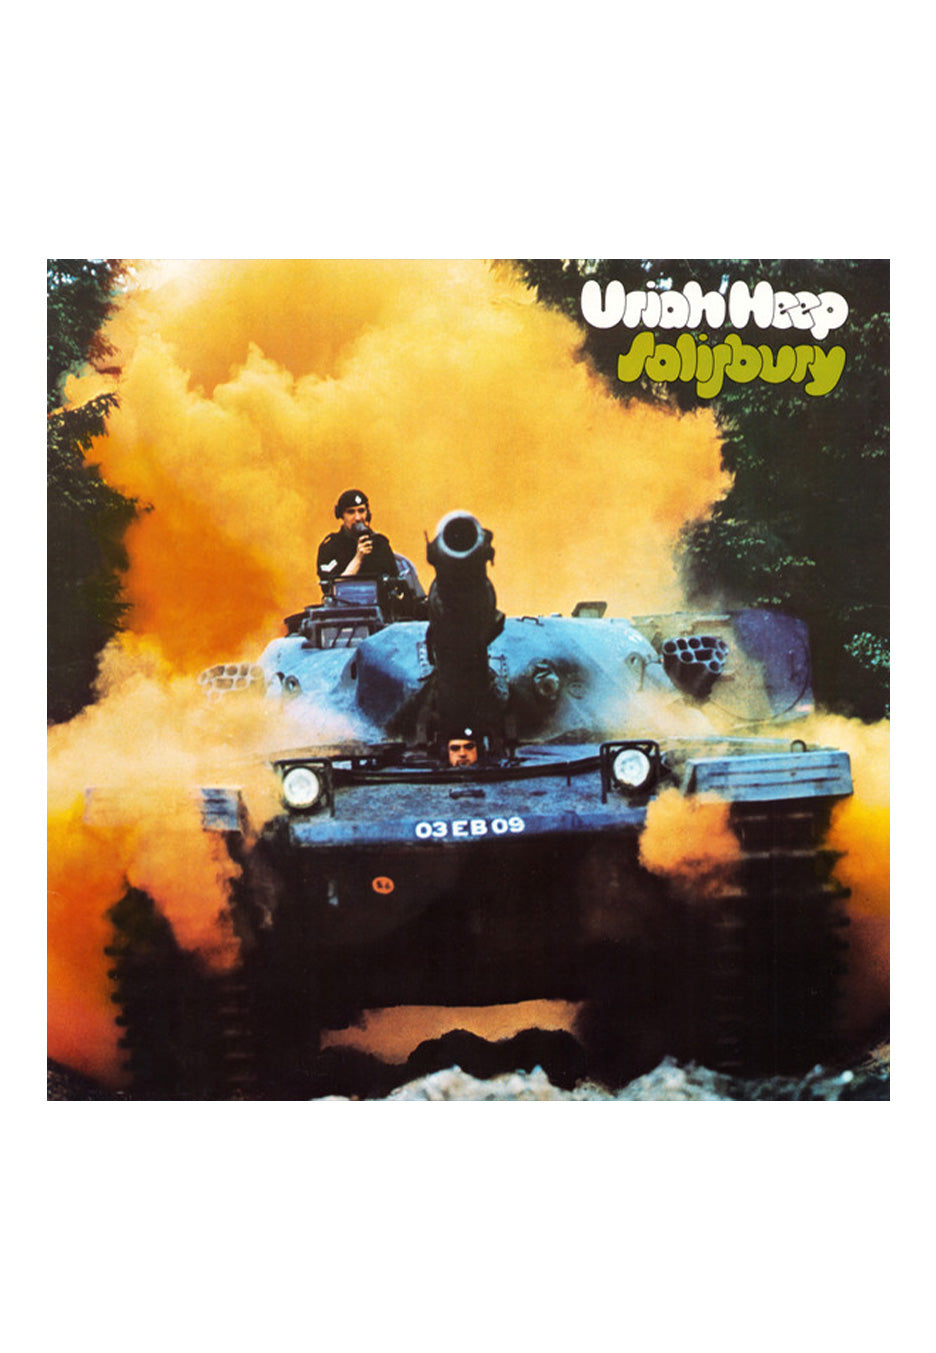 Uriah Heep - Salisbury (Expanded Edition) - Digipak 2 CD